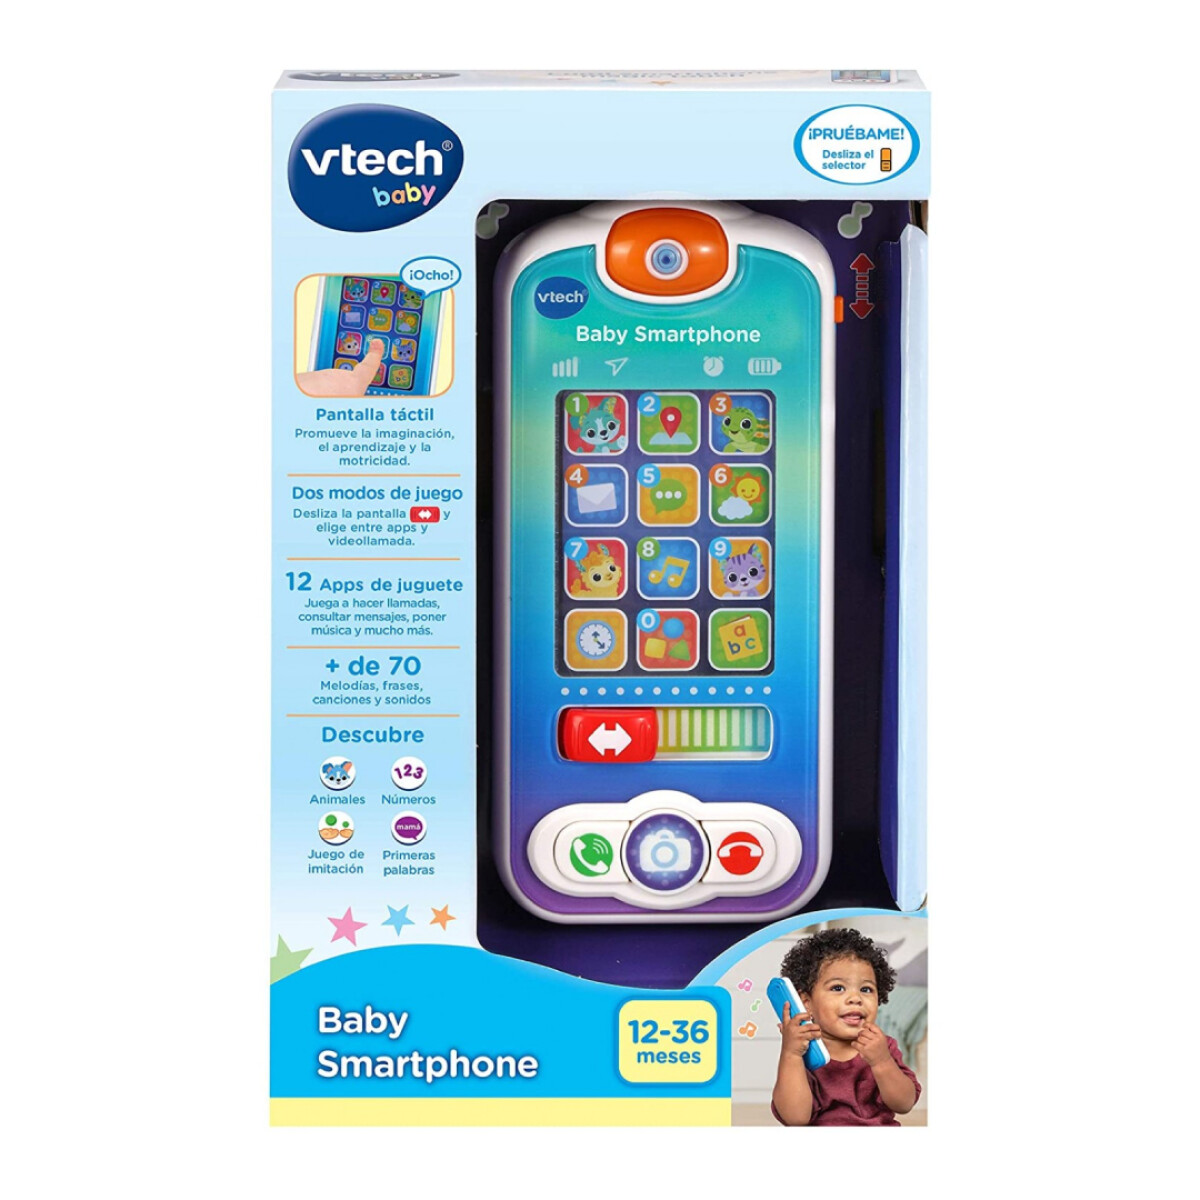 Baby Smartphone Vtech 537622 Interactivo - 001 